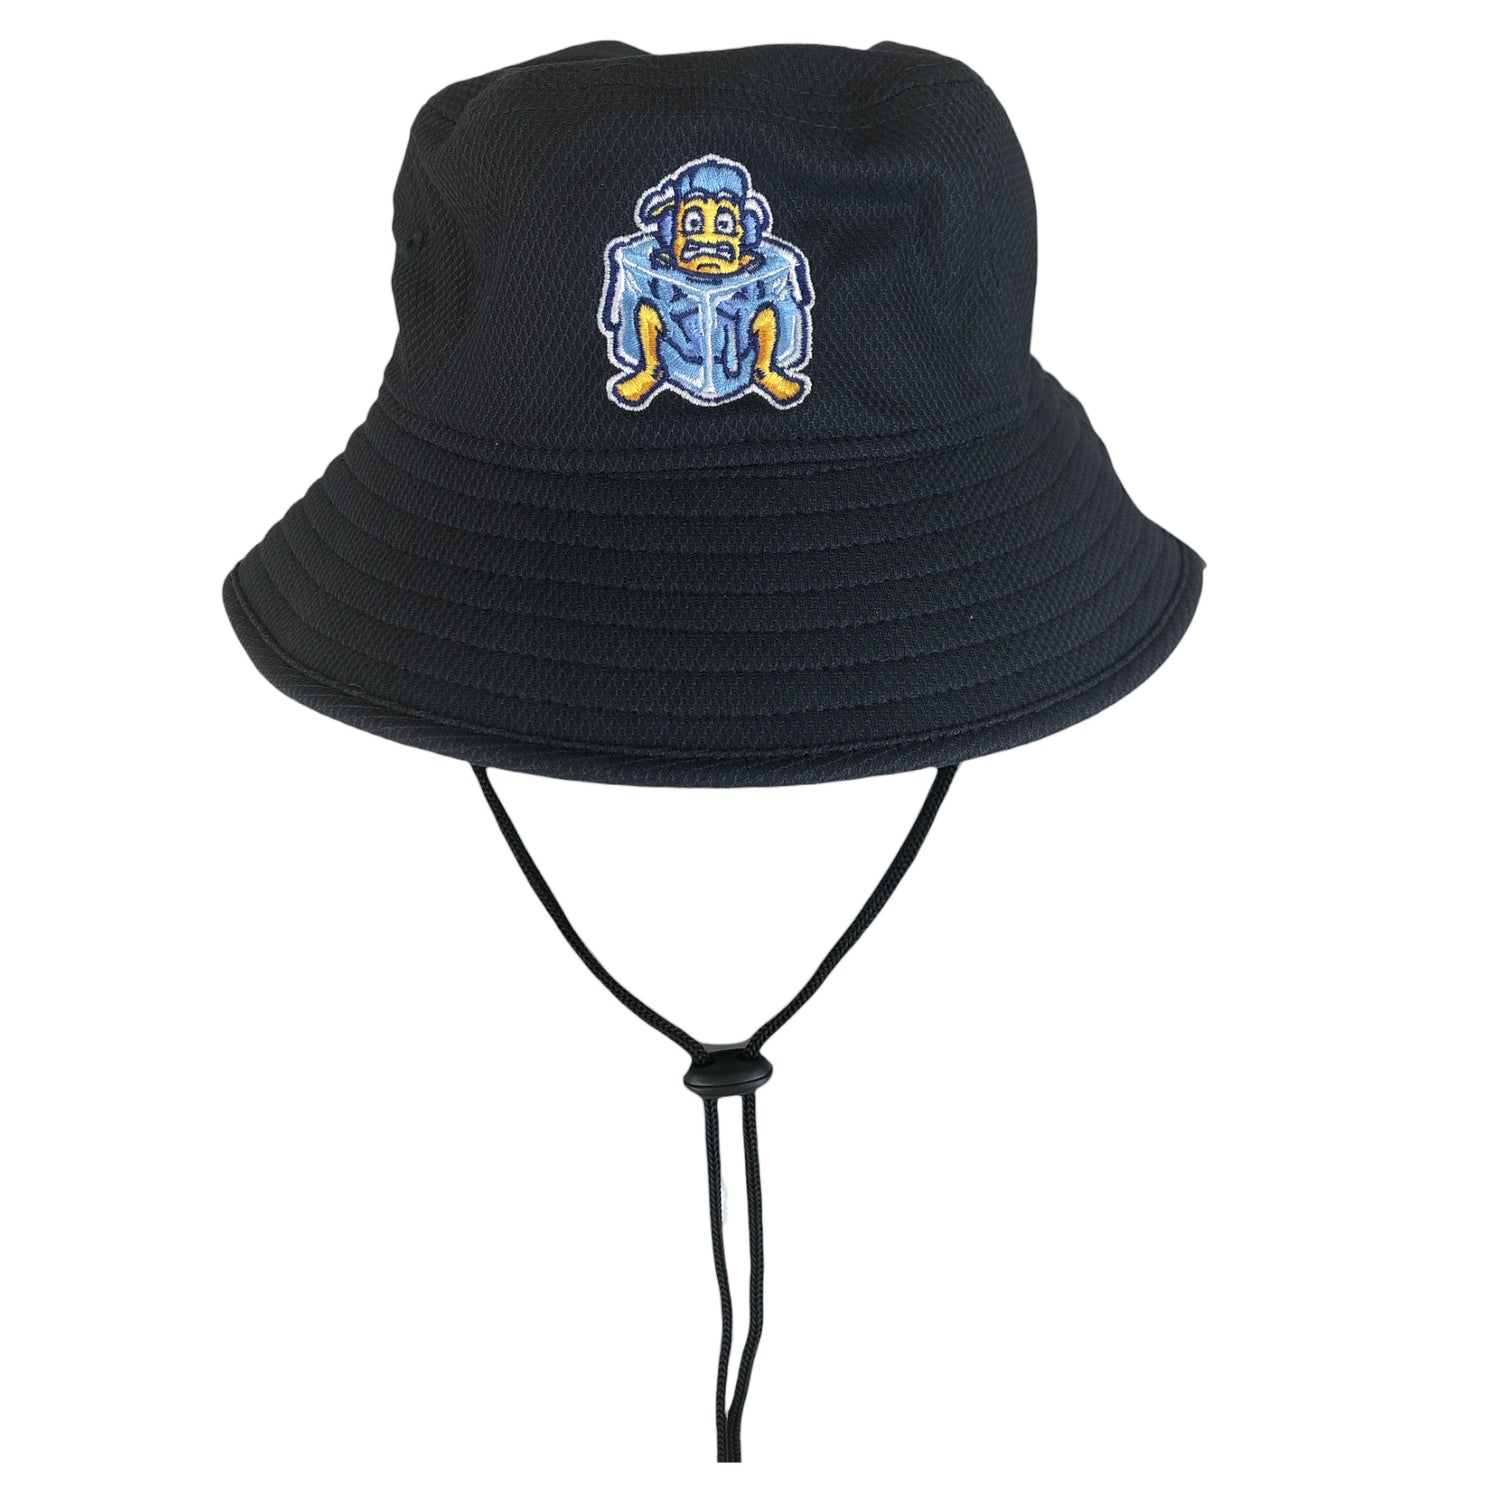 DubSea Fish Sticks New Era Ice Cube navy bucket hat with adjustable strap.